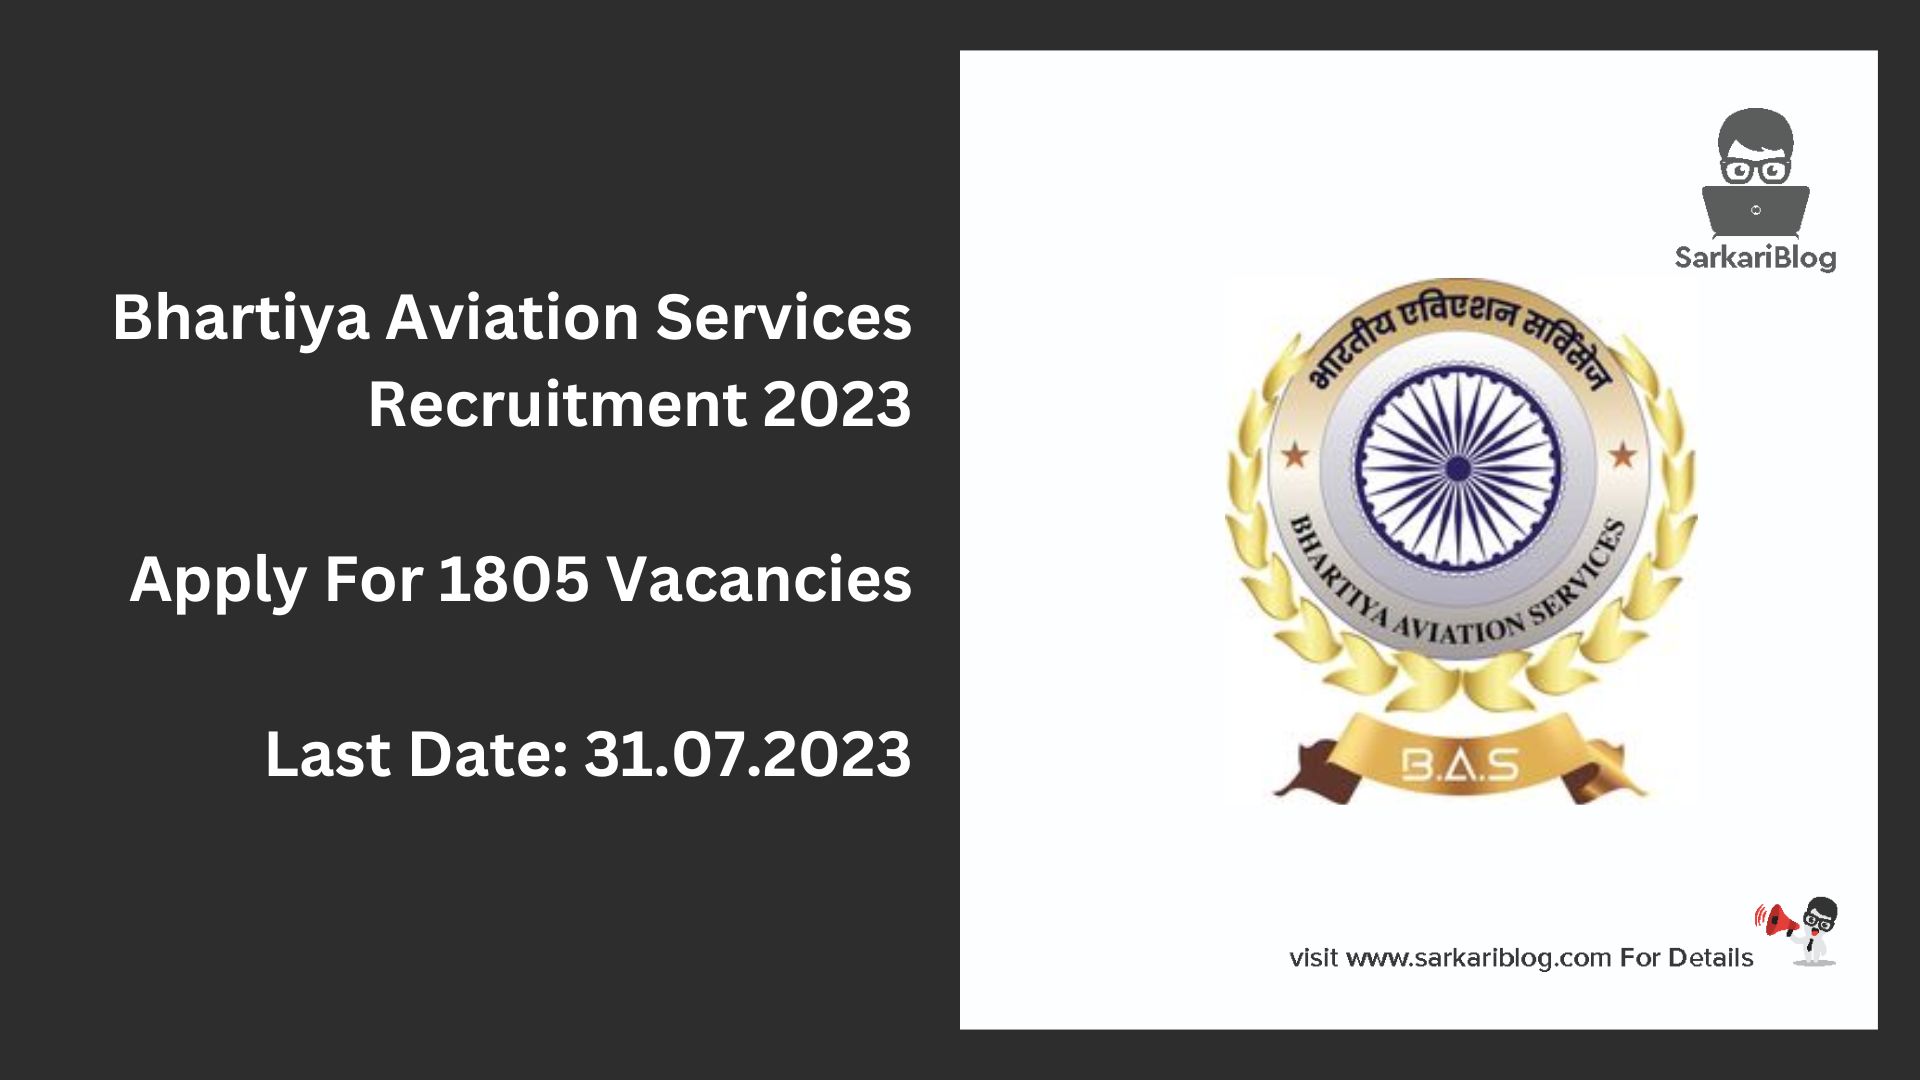 Bhartiya Aviation Services Recruitment 2023